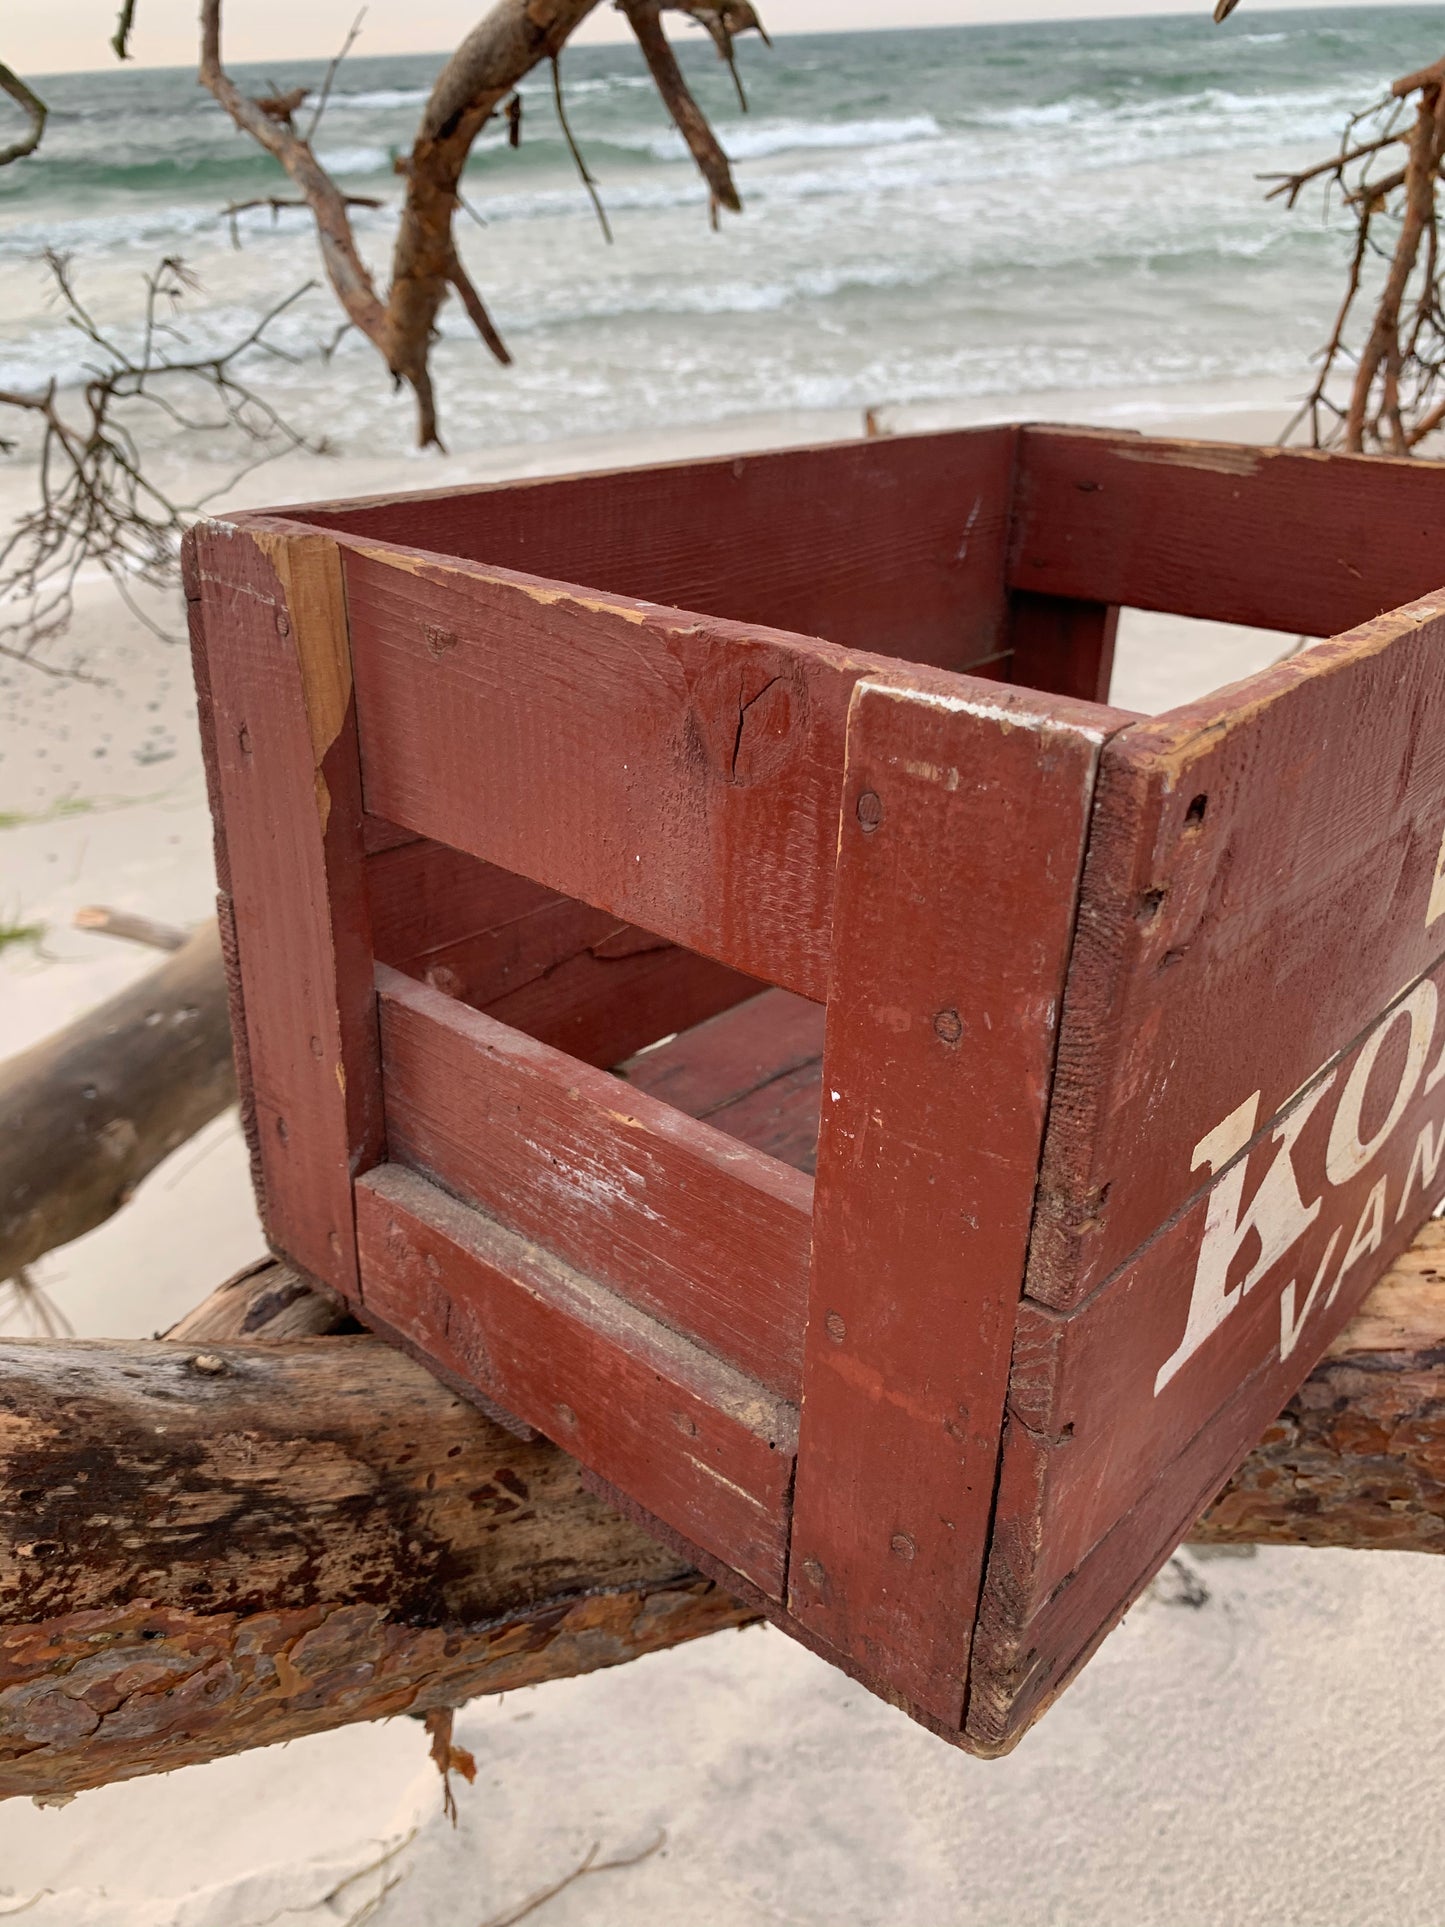 Faxe Koral kasse